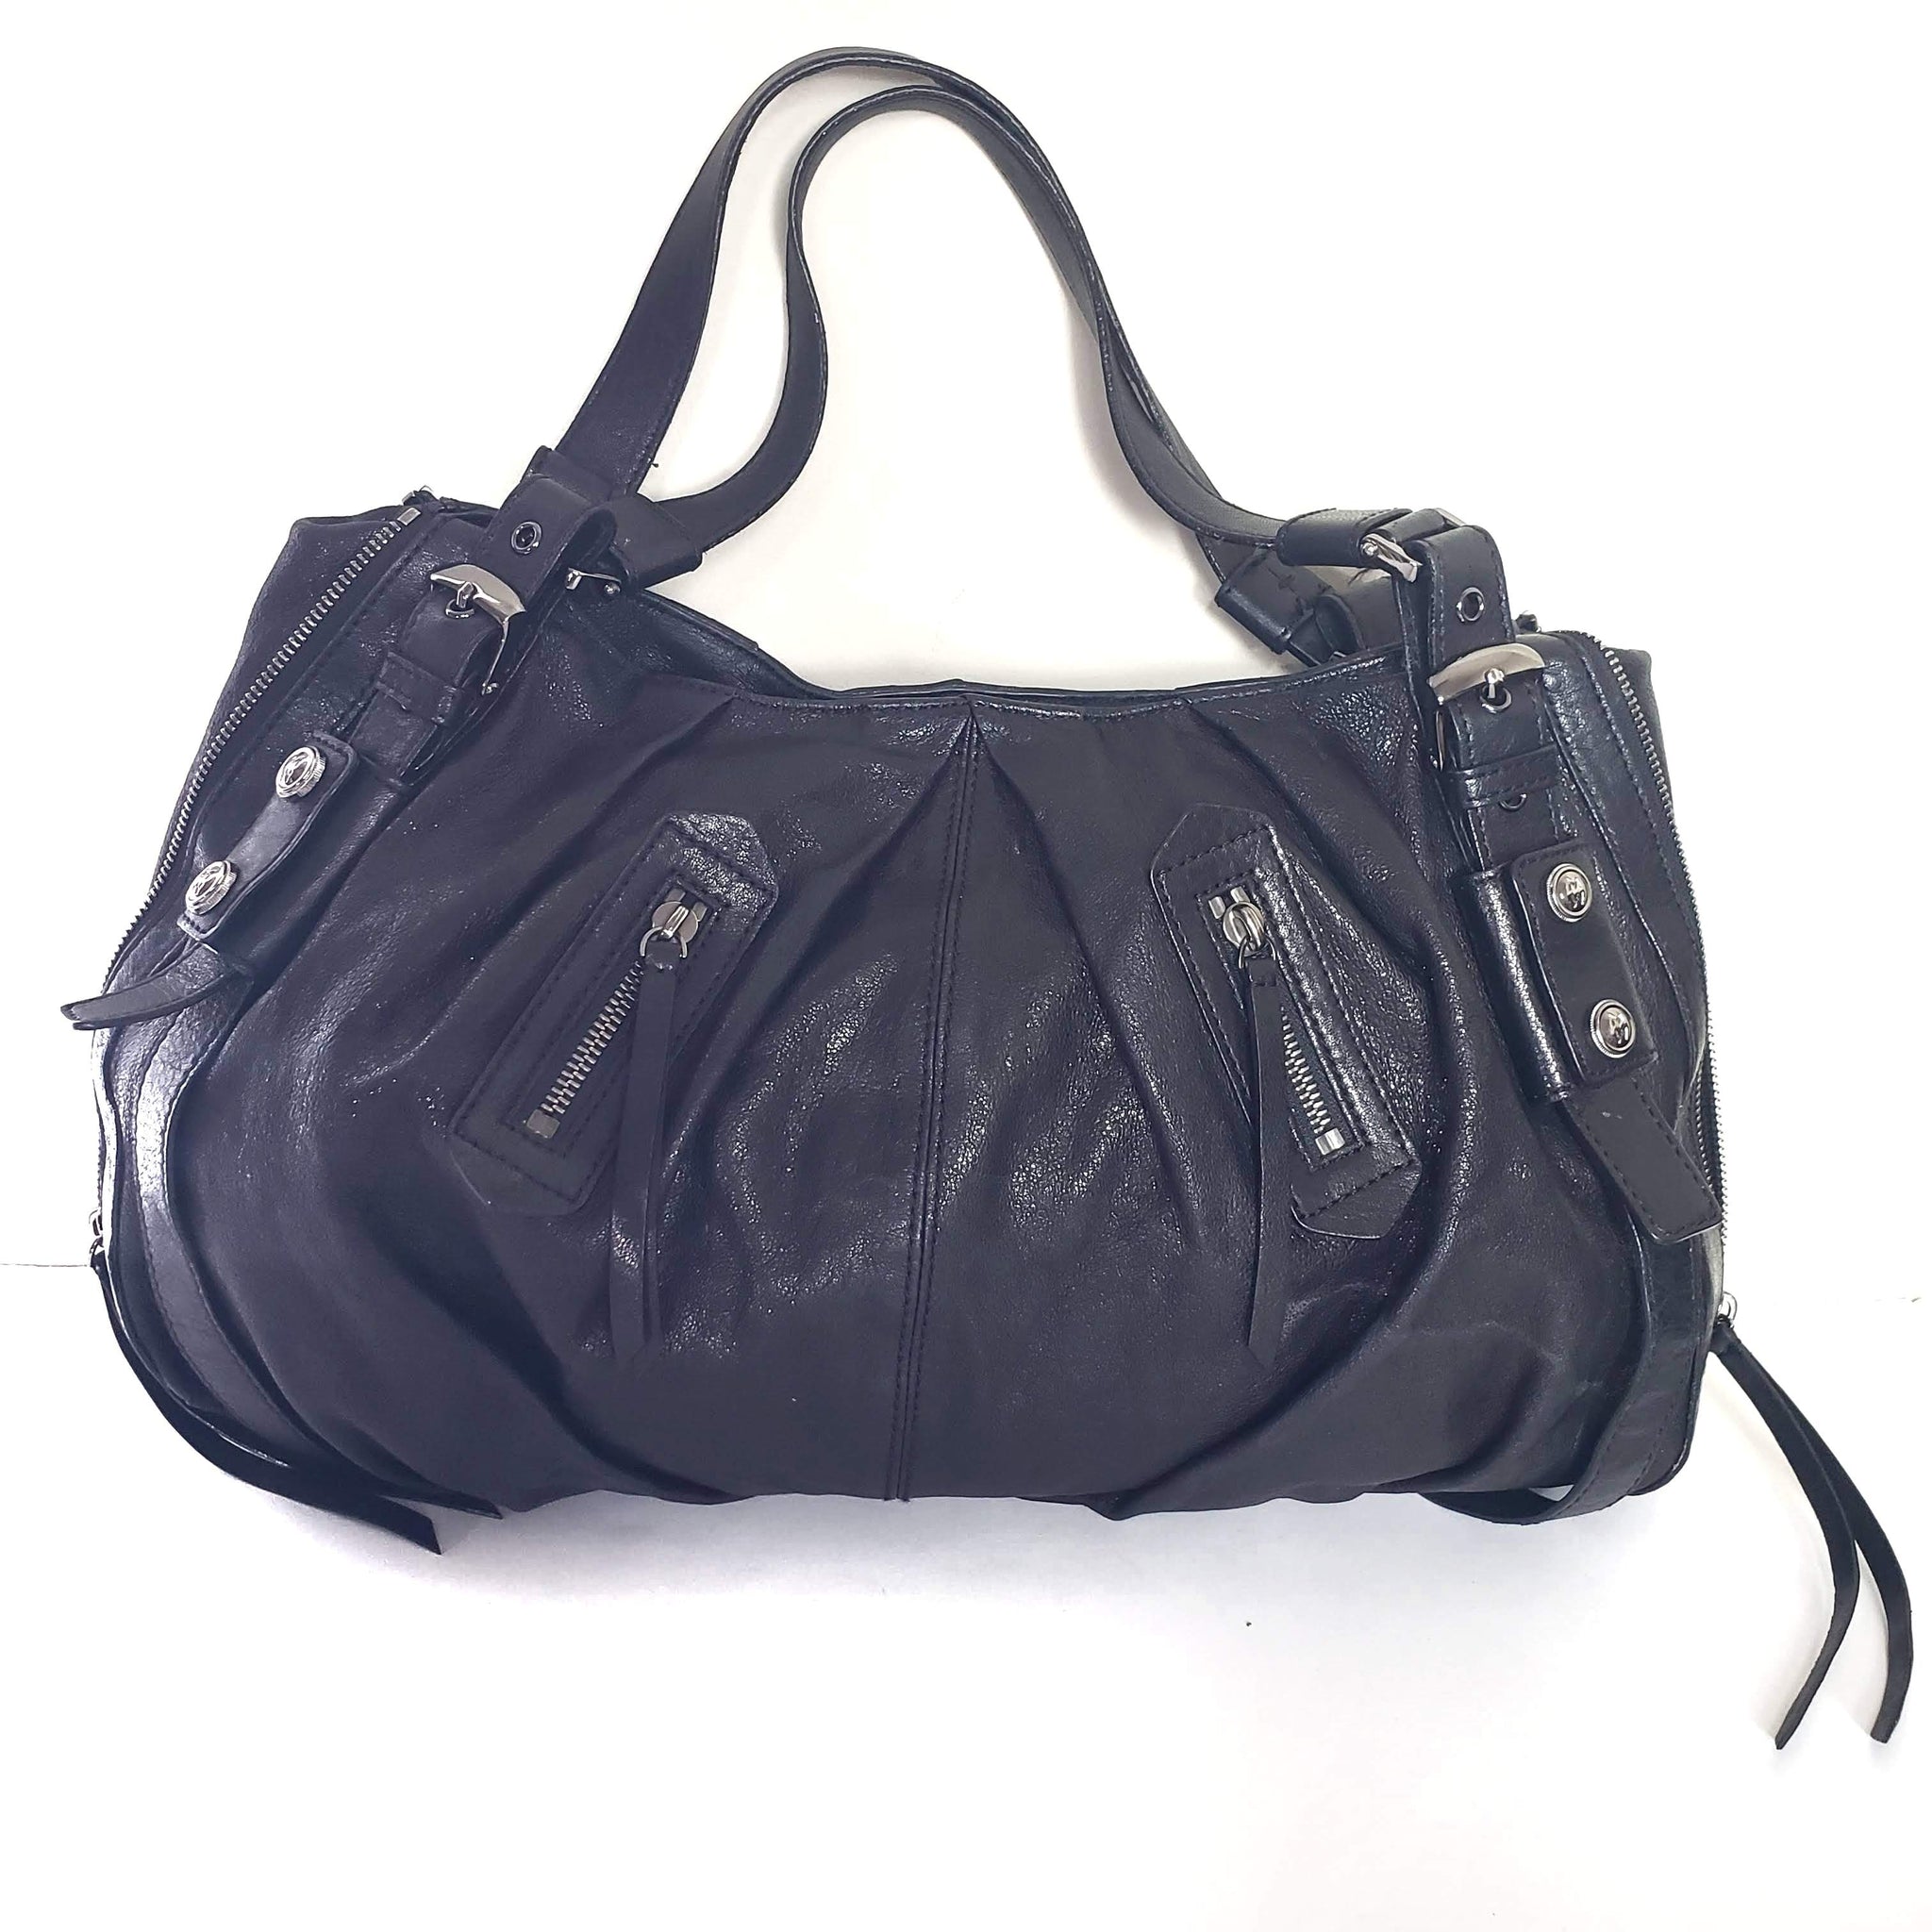 Michele Black Leather Hobo Bag